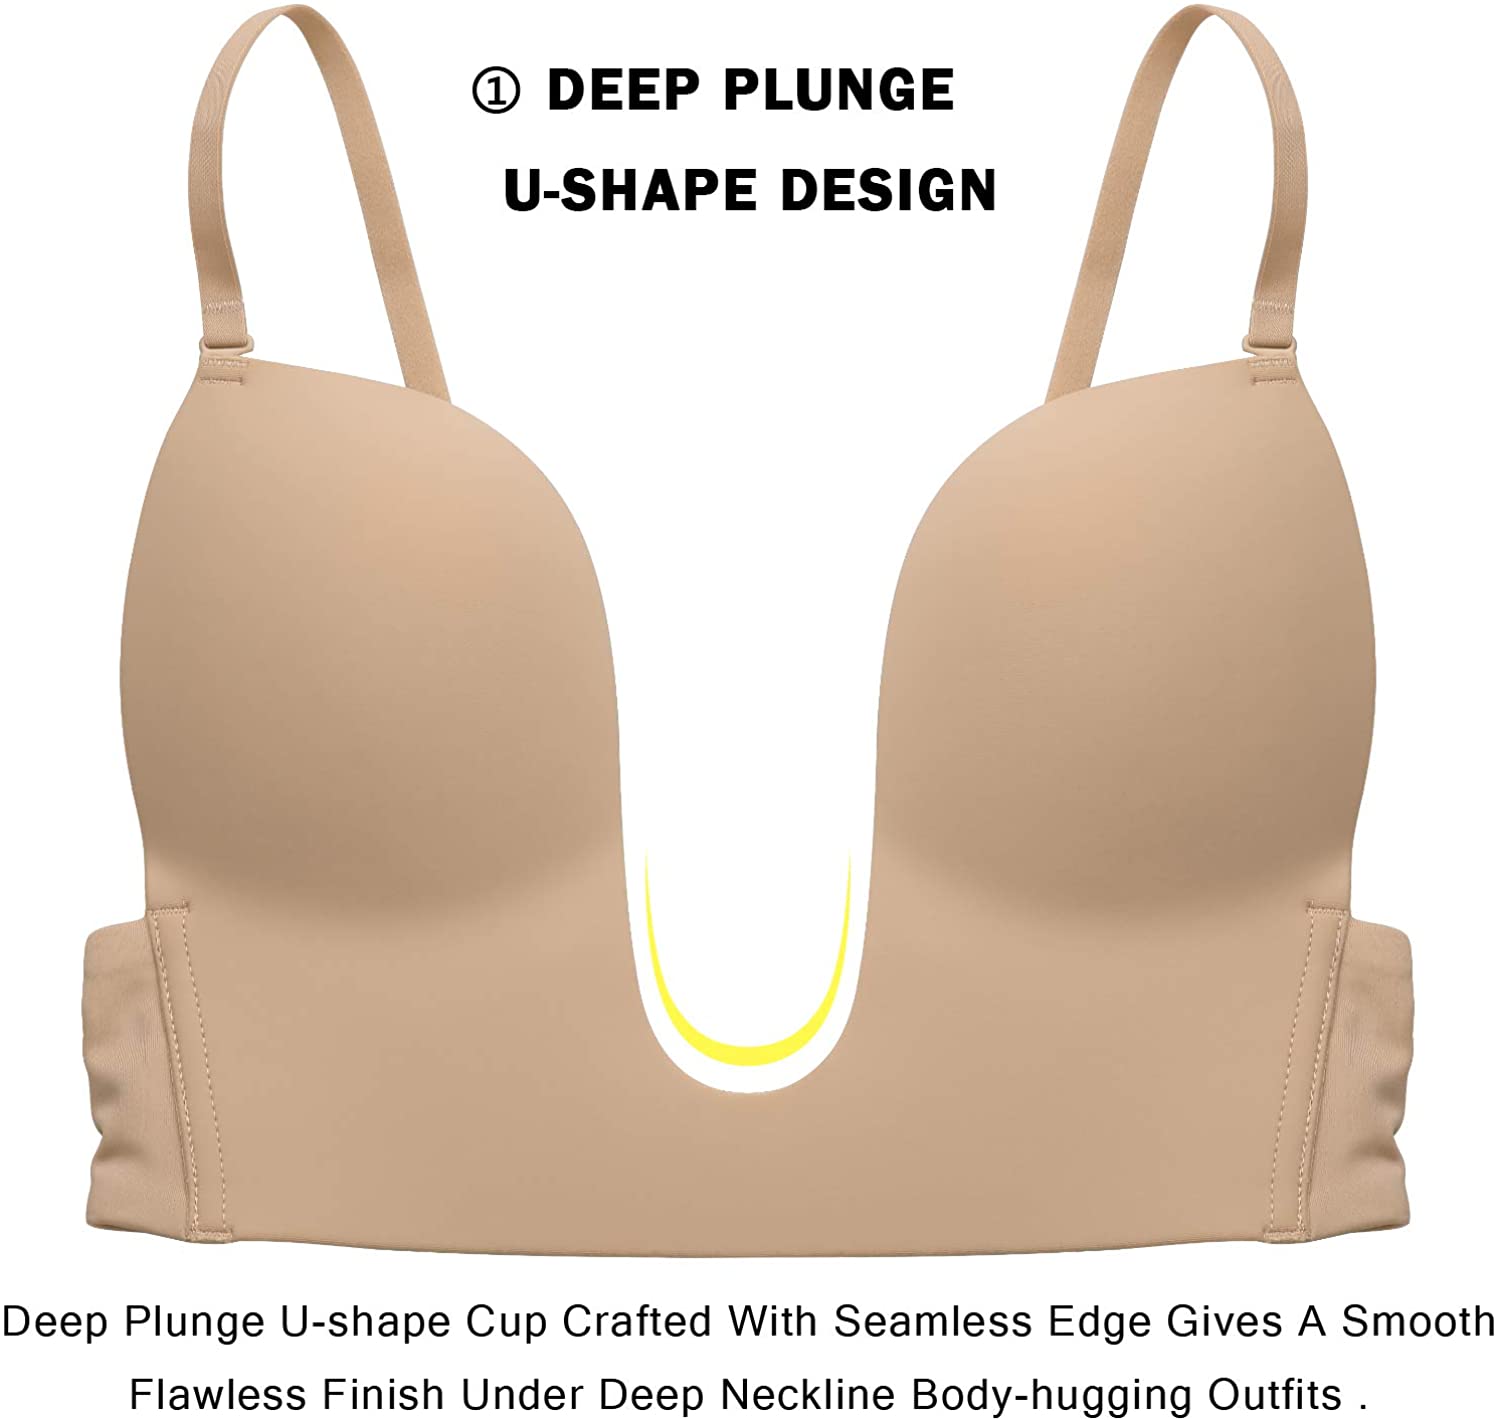 Joateay Womens Deep Plunge Bra Convertible Push Up Low Cut Nude Size 34c Ij1c Ebay 6657